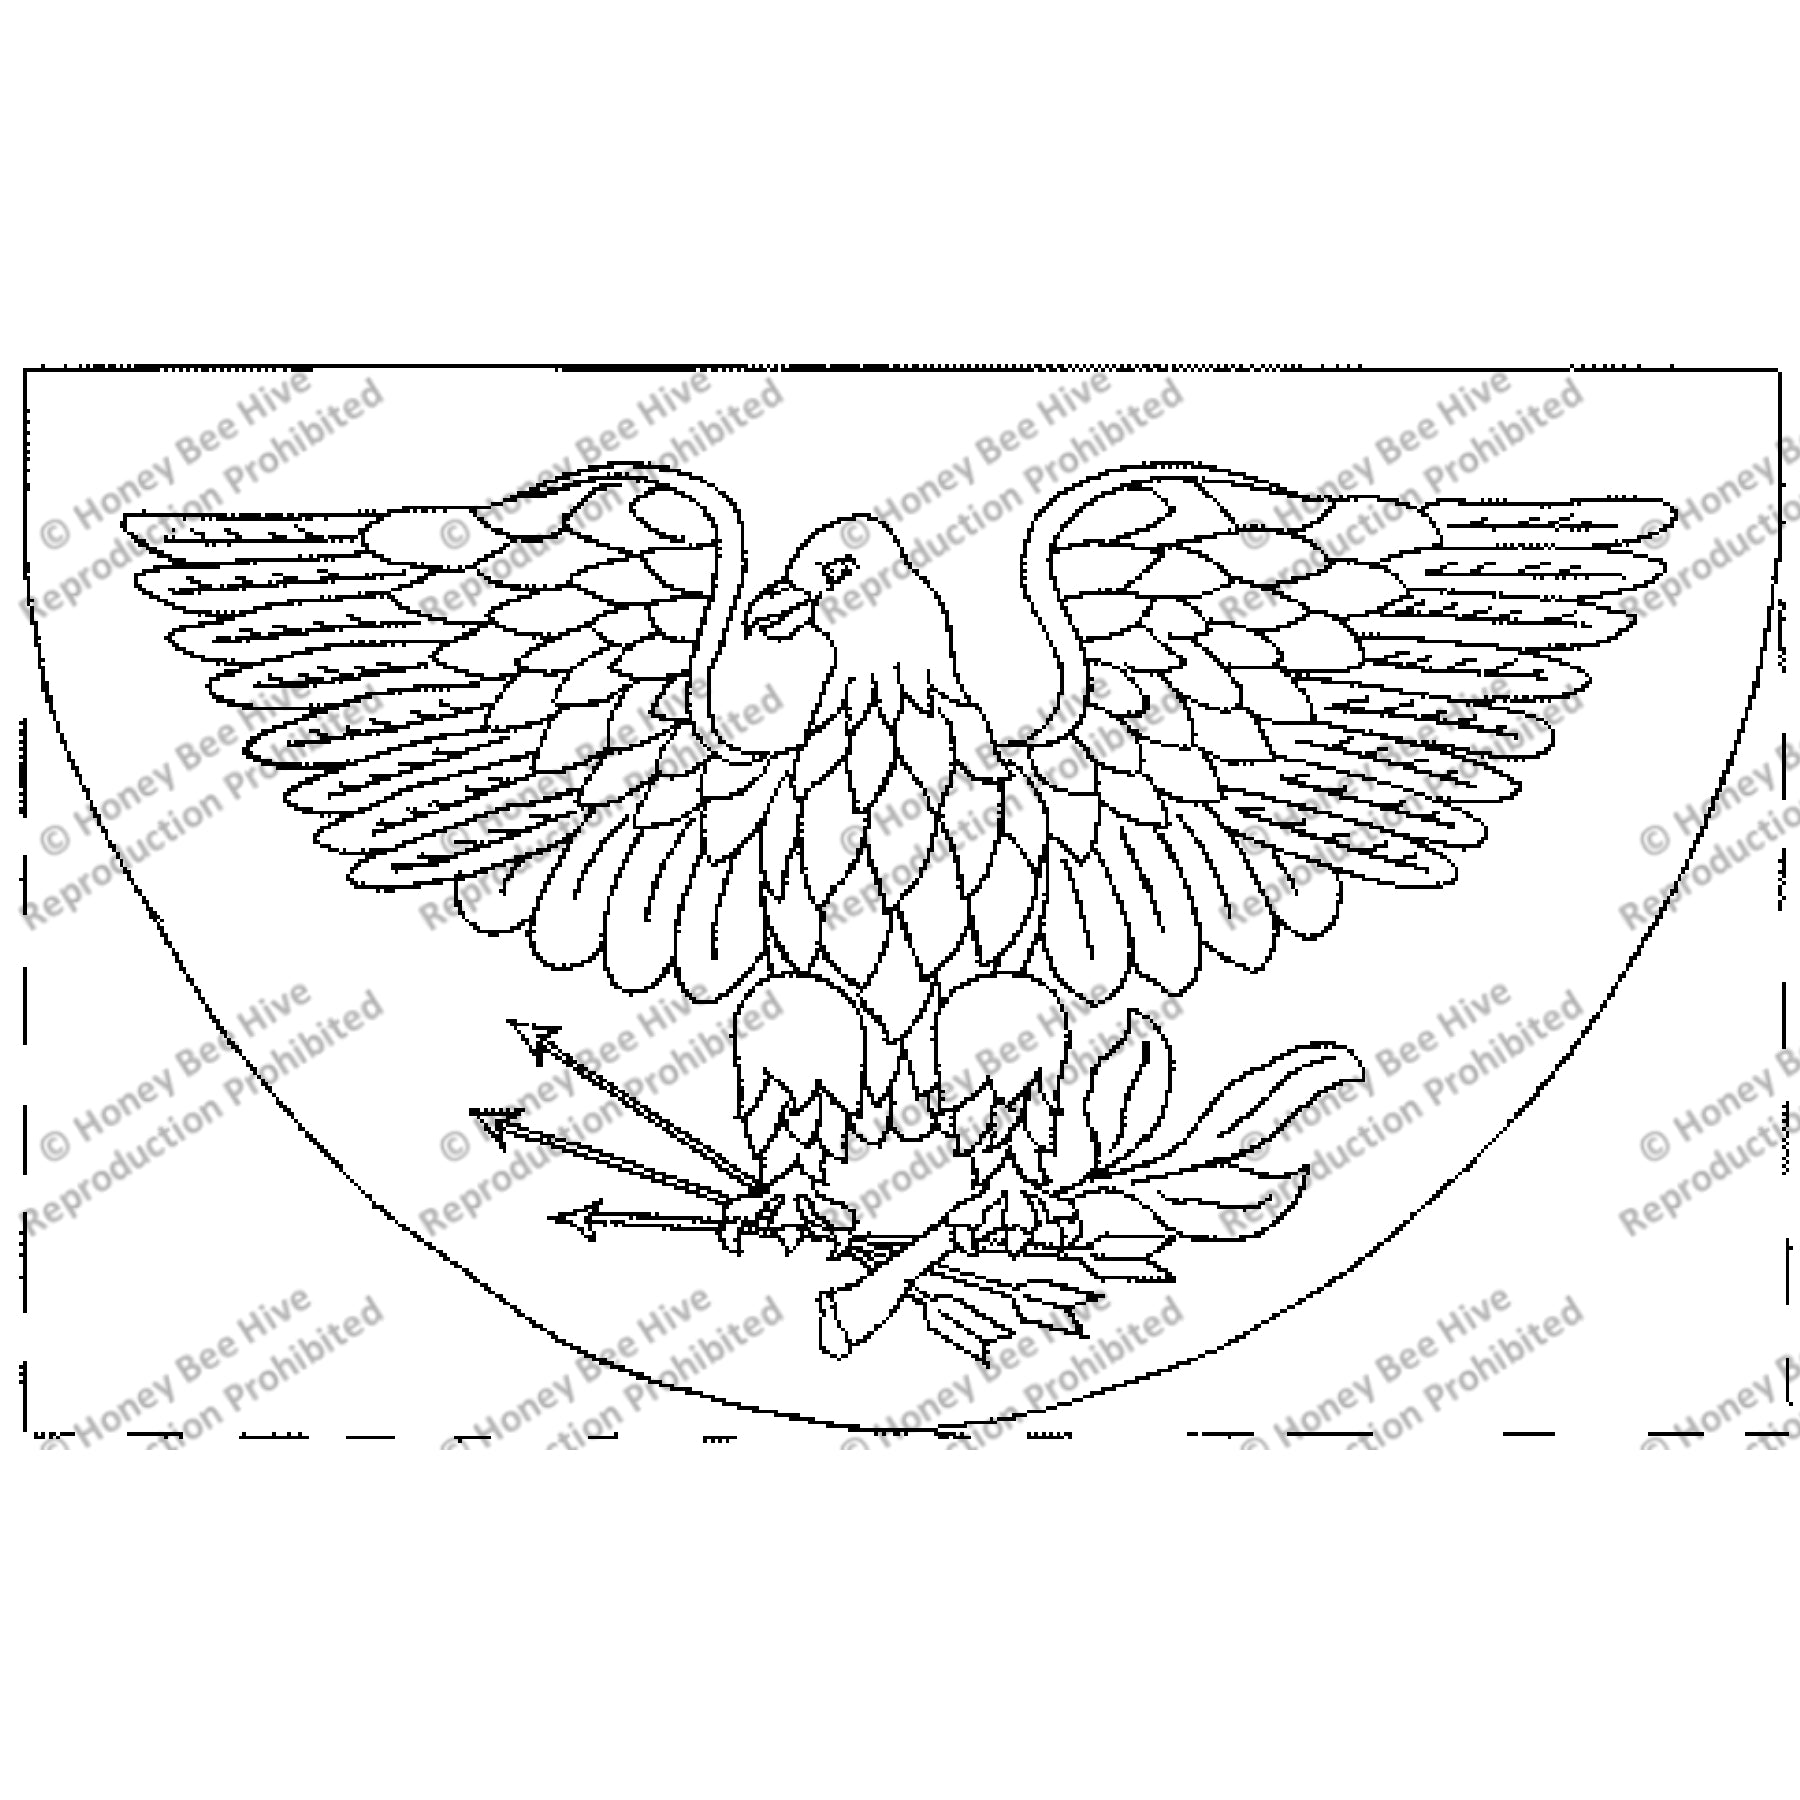 Eagle Hearth, rug hooking pattern